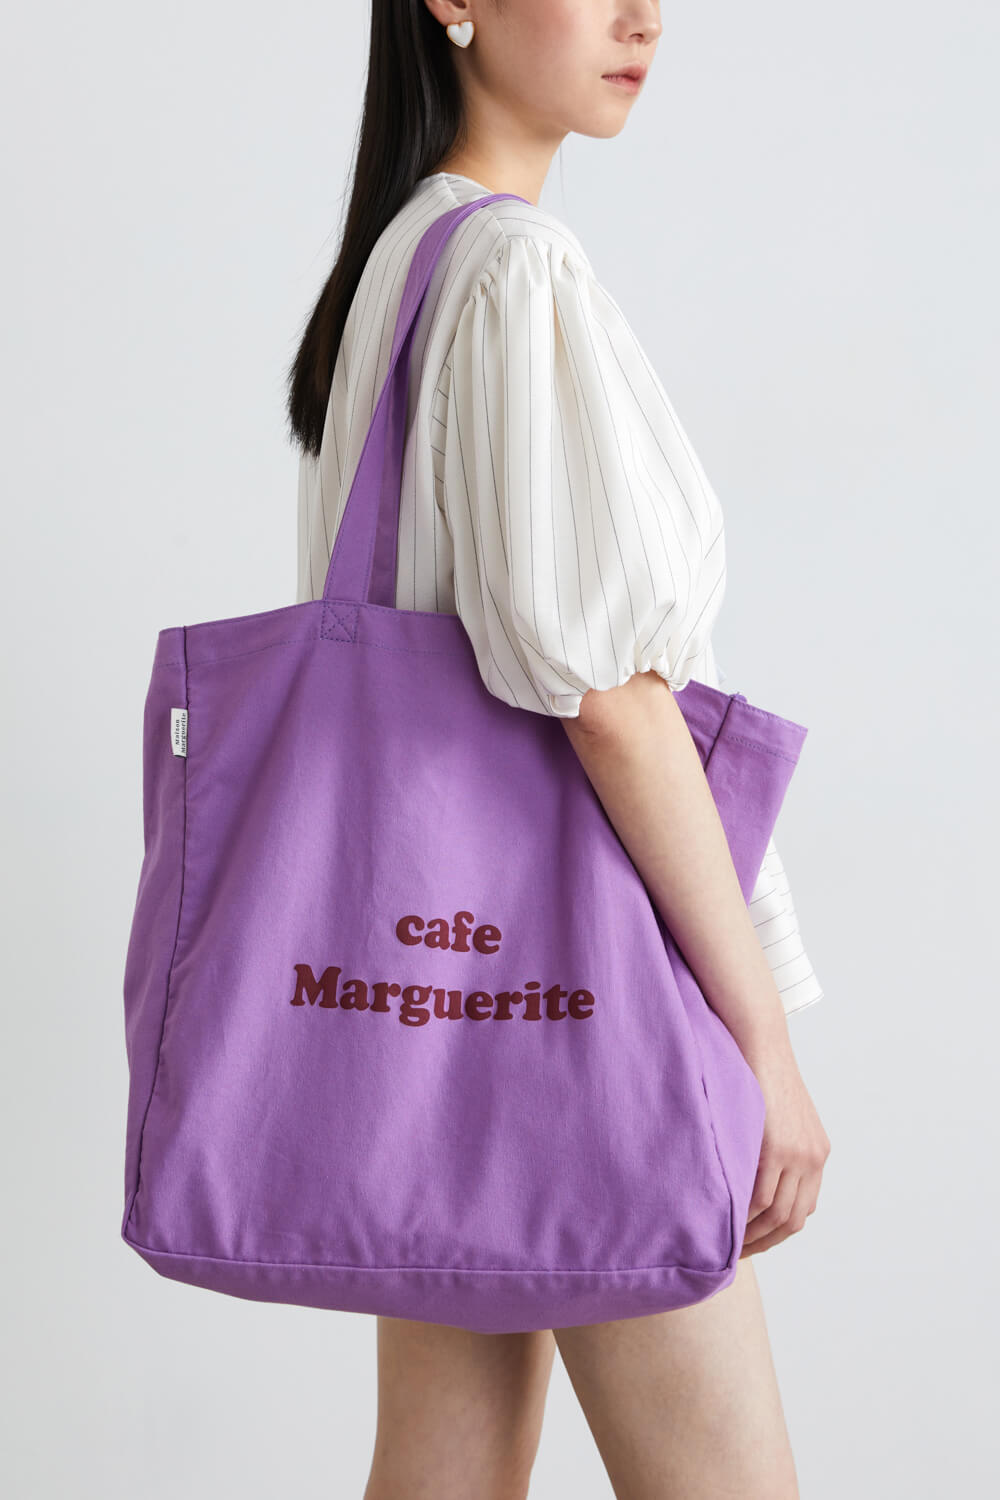 Cafe Marguerite 斜紋布袋